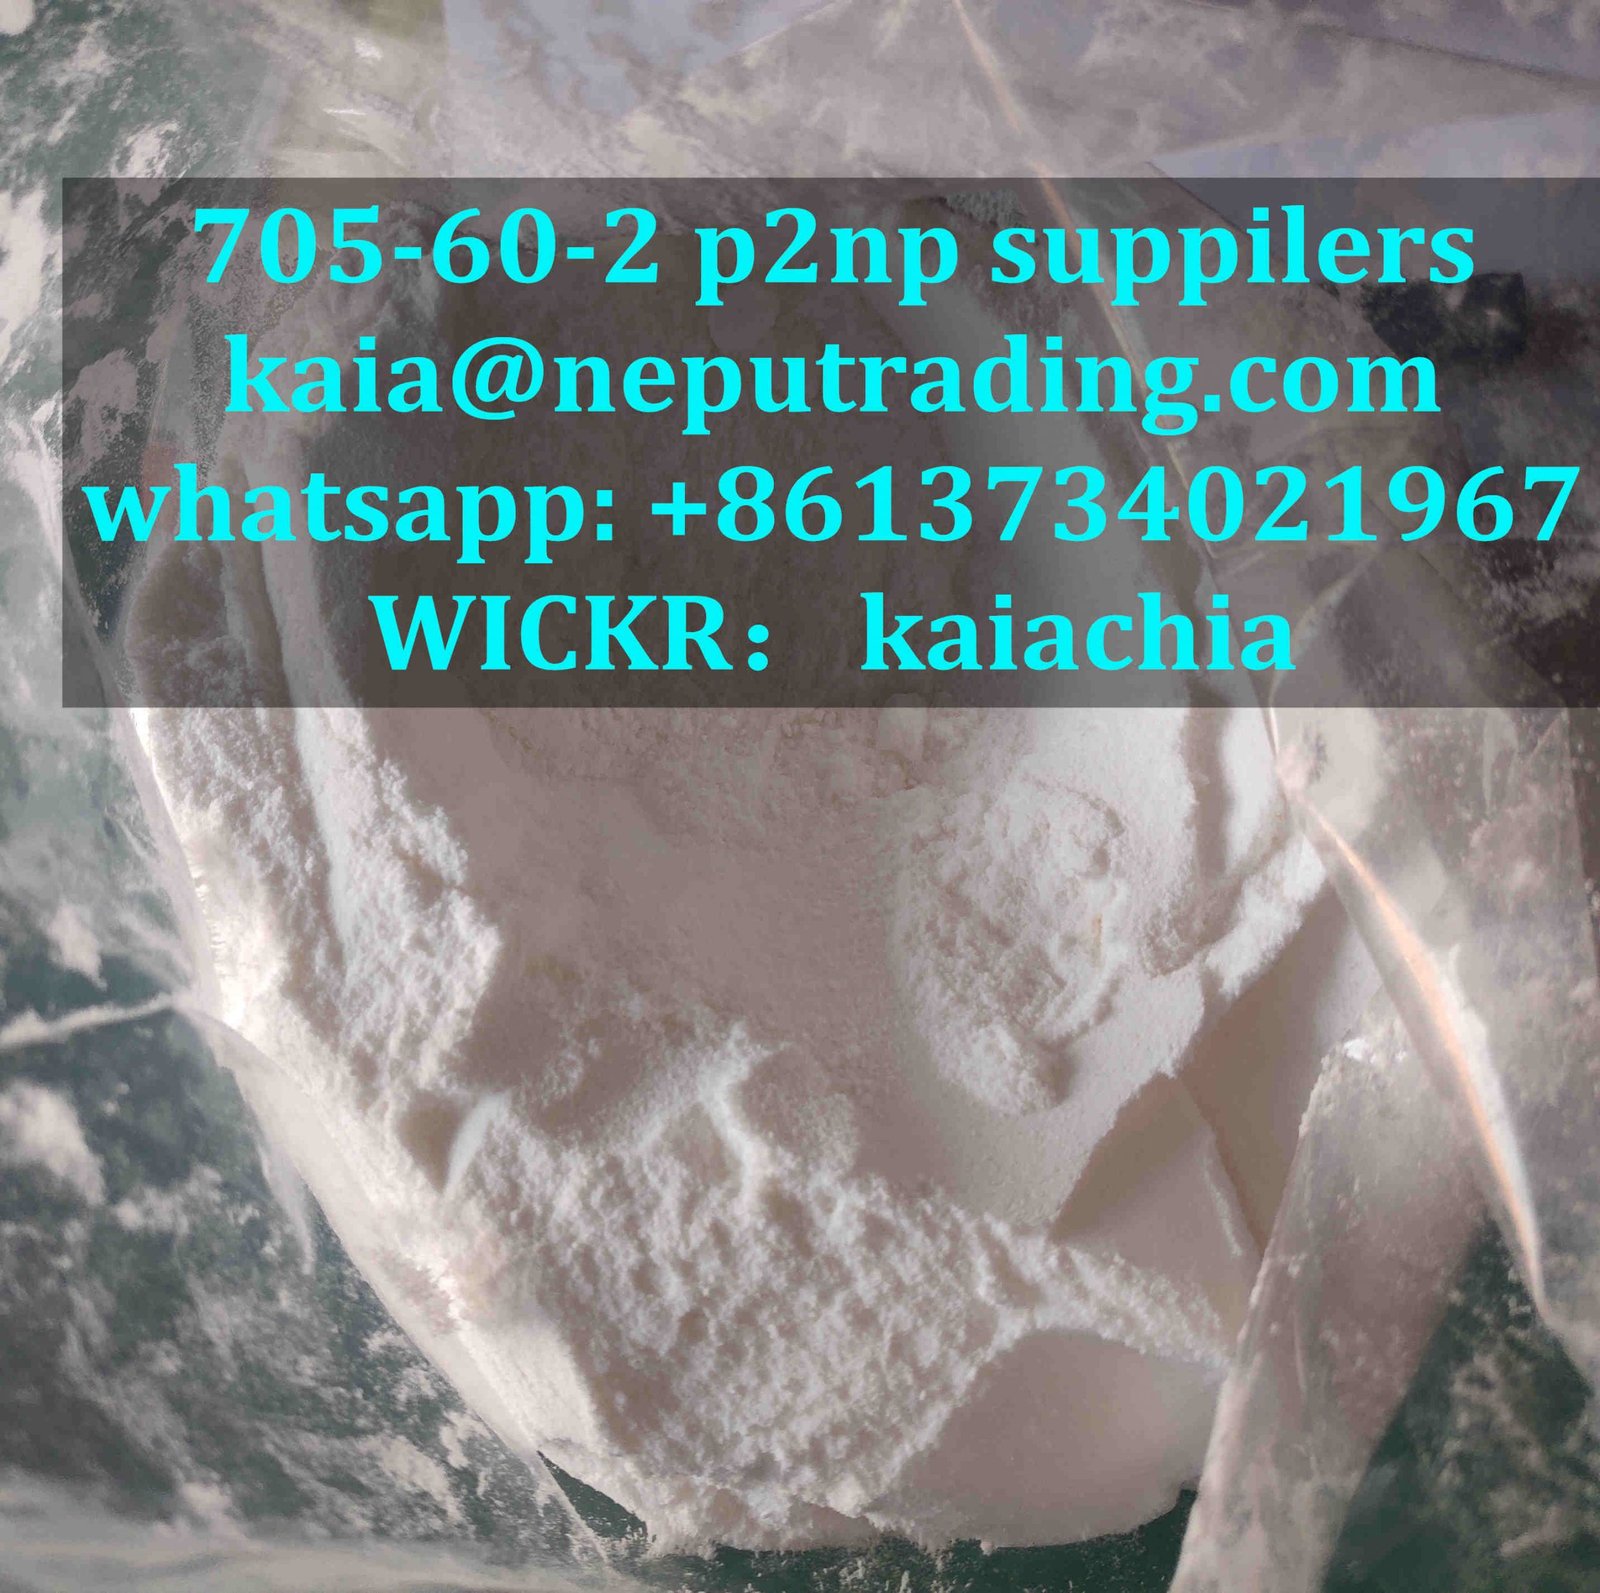 705-60-2 p2np suppliers kaia@neputrading.com whatsapp:+8613734021967